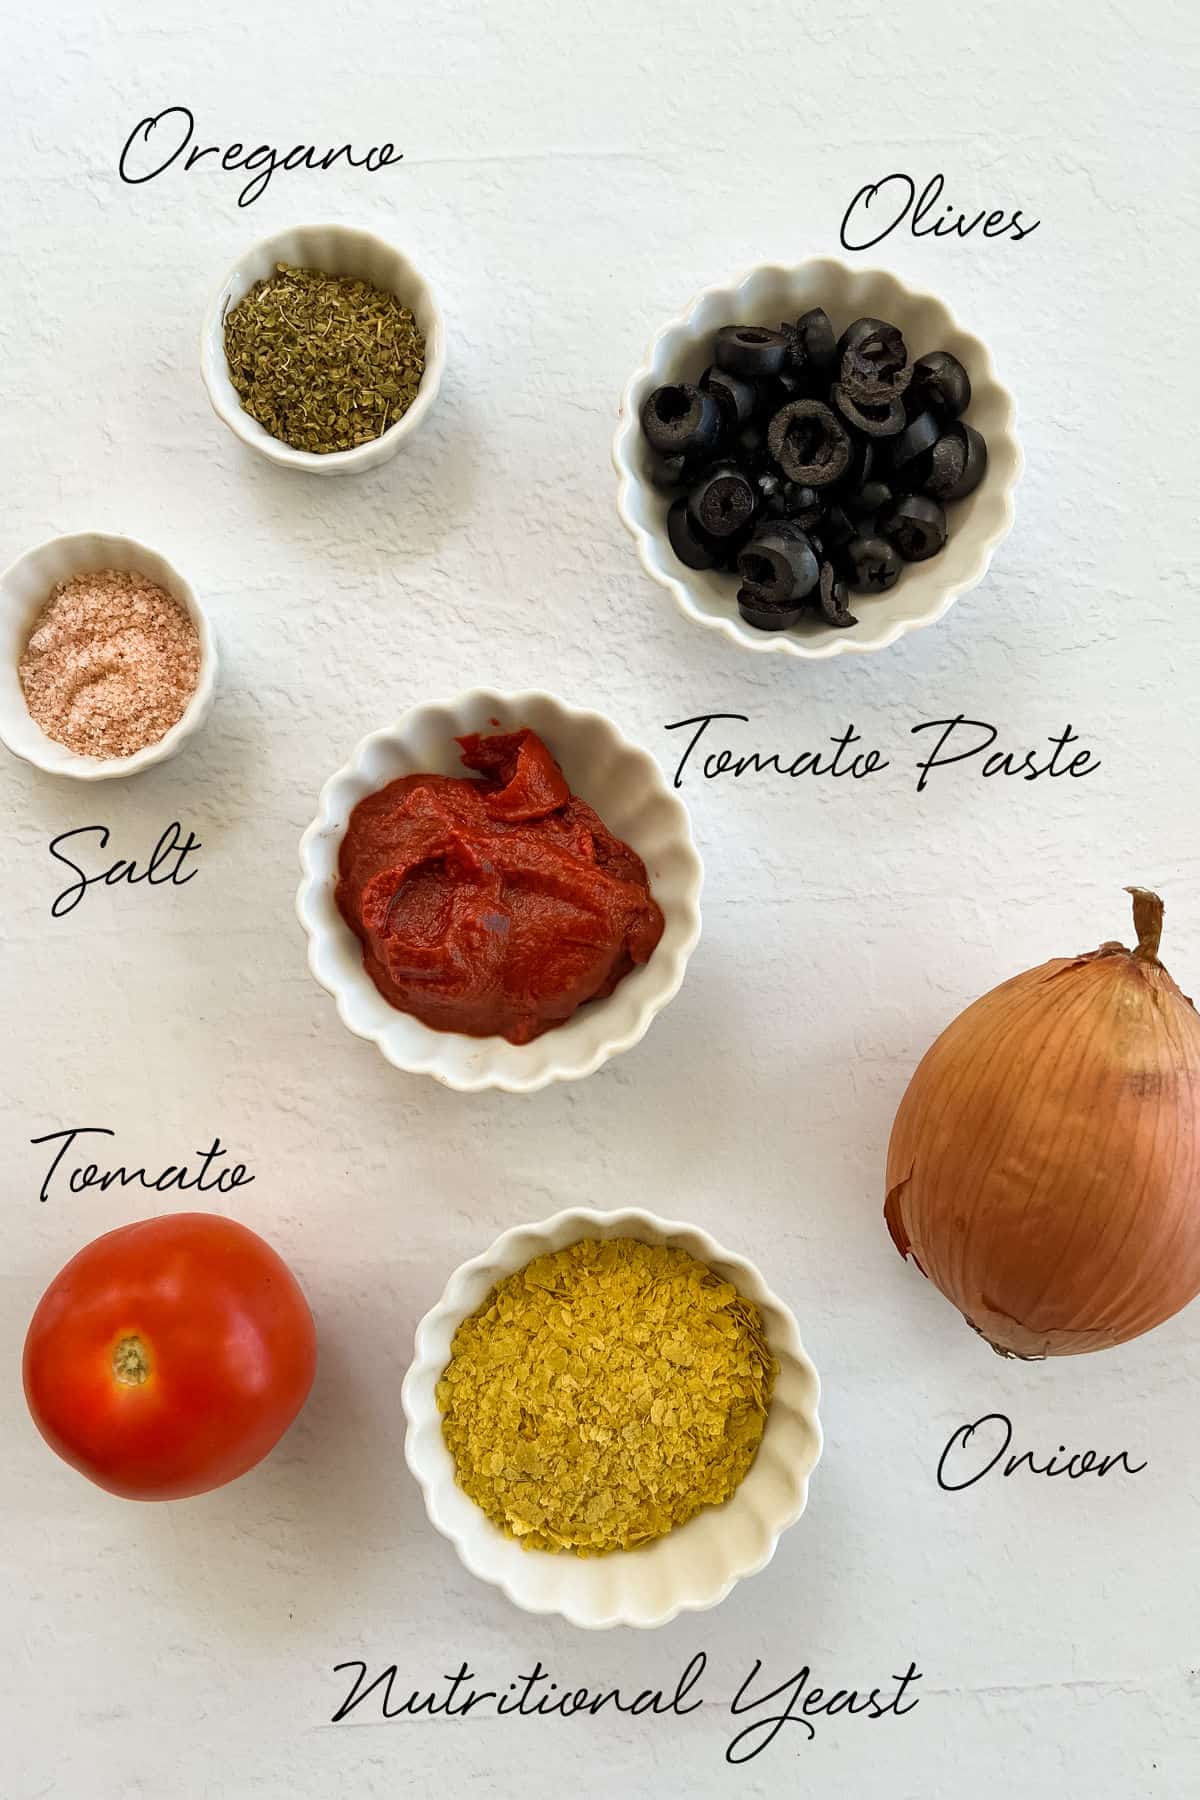 black olives, oregano, onion, nutritional yeast, salt, tomato paste, tomato in white bowls